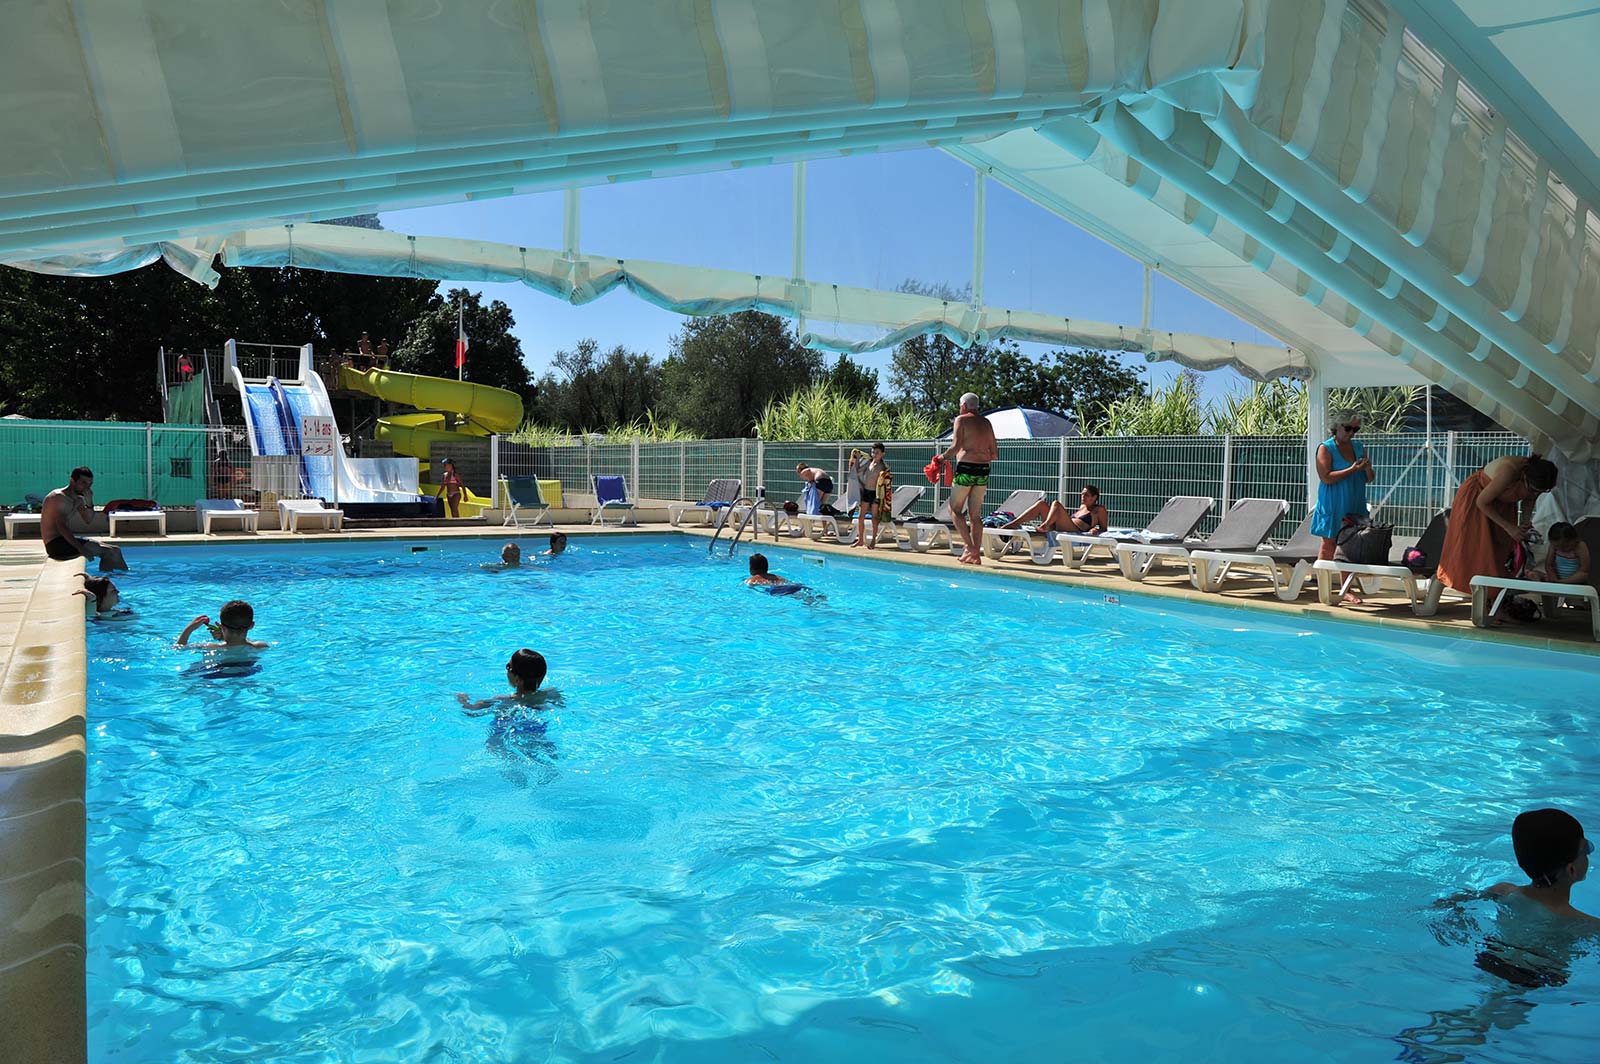 Indoor heated swimming pool in the indoor aquatic area of the campsite in Oléron